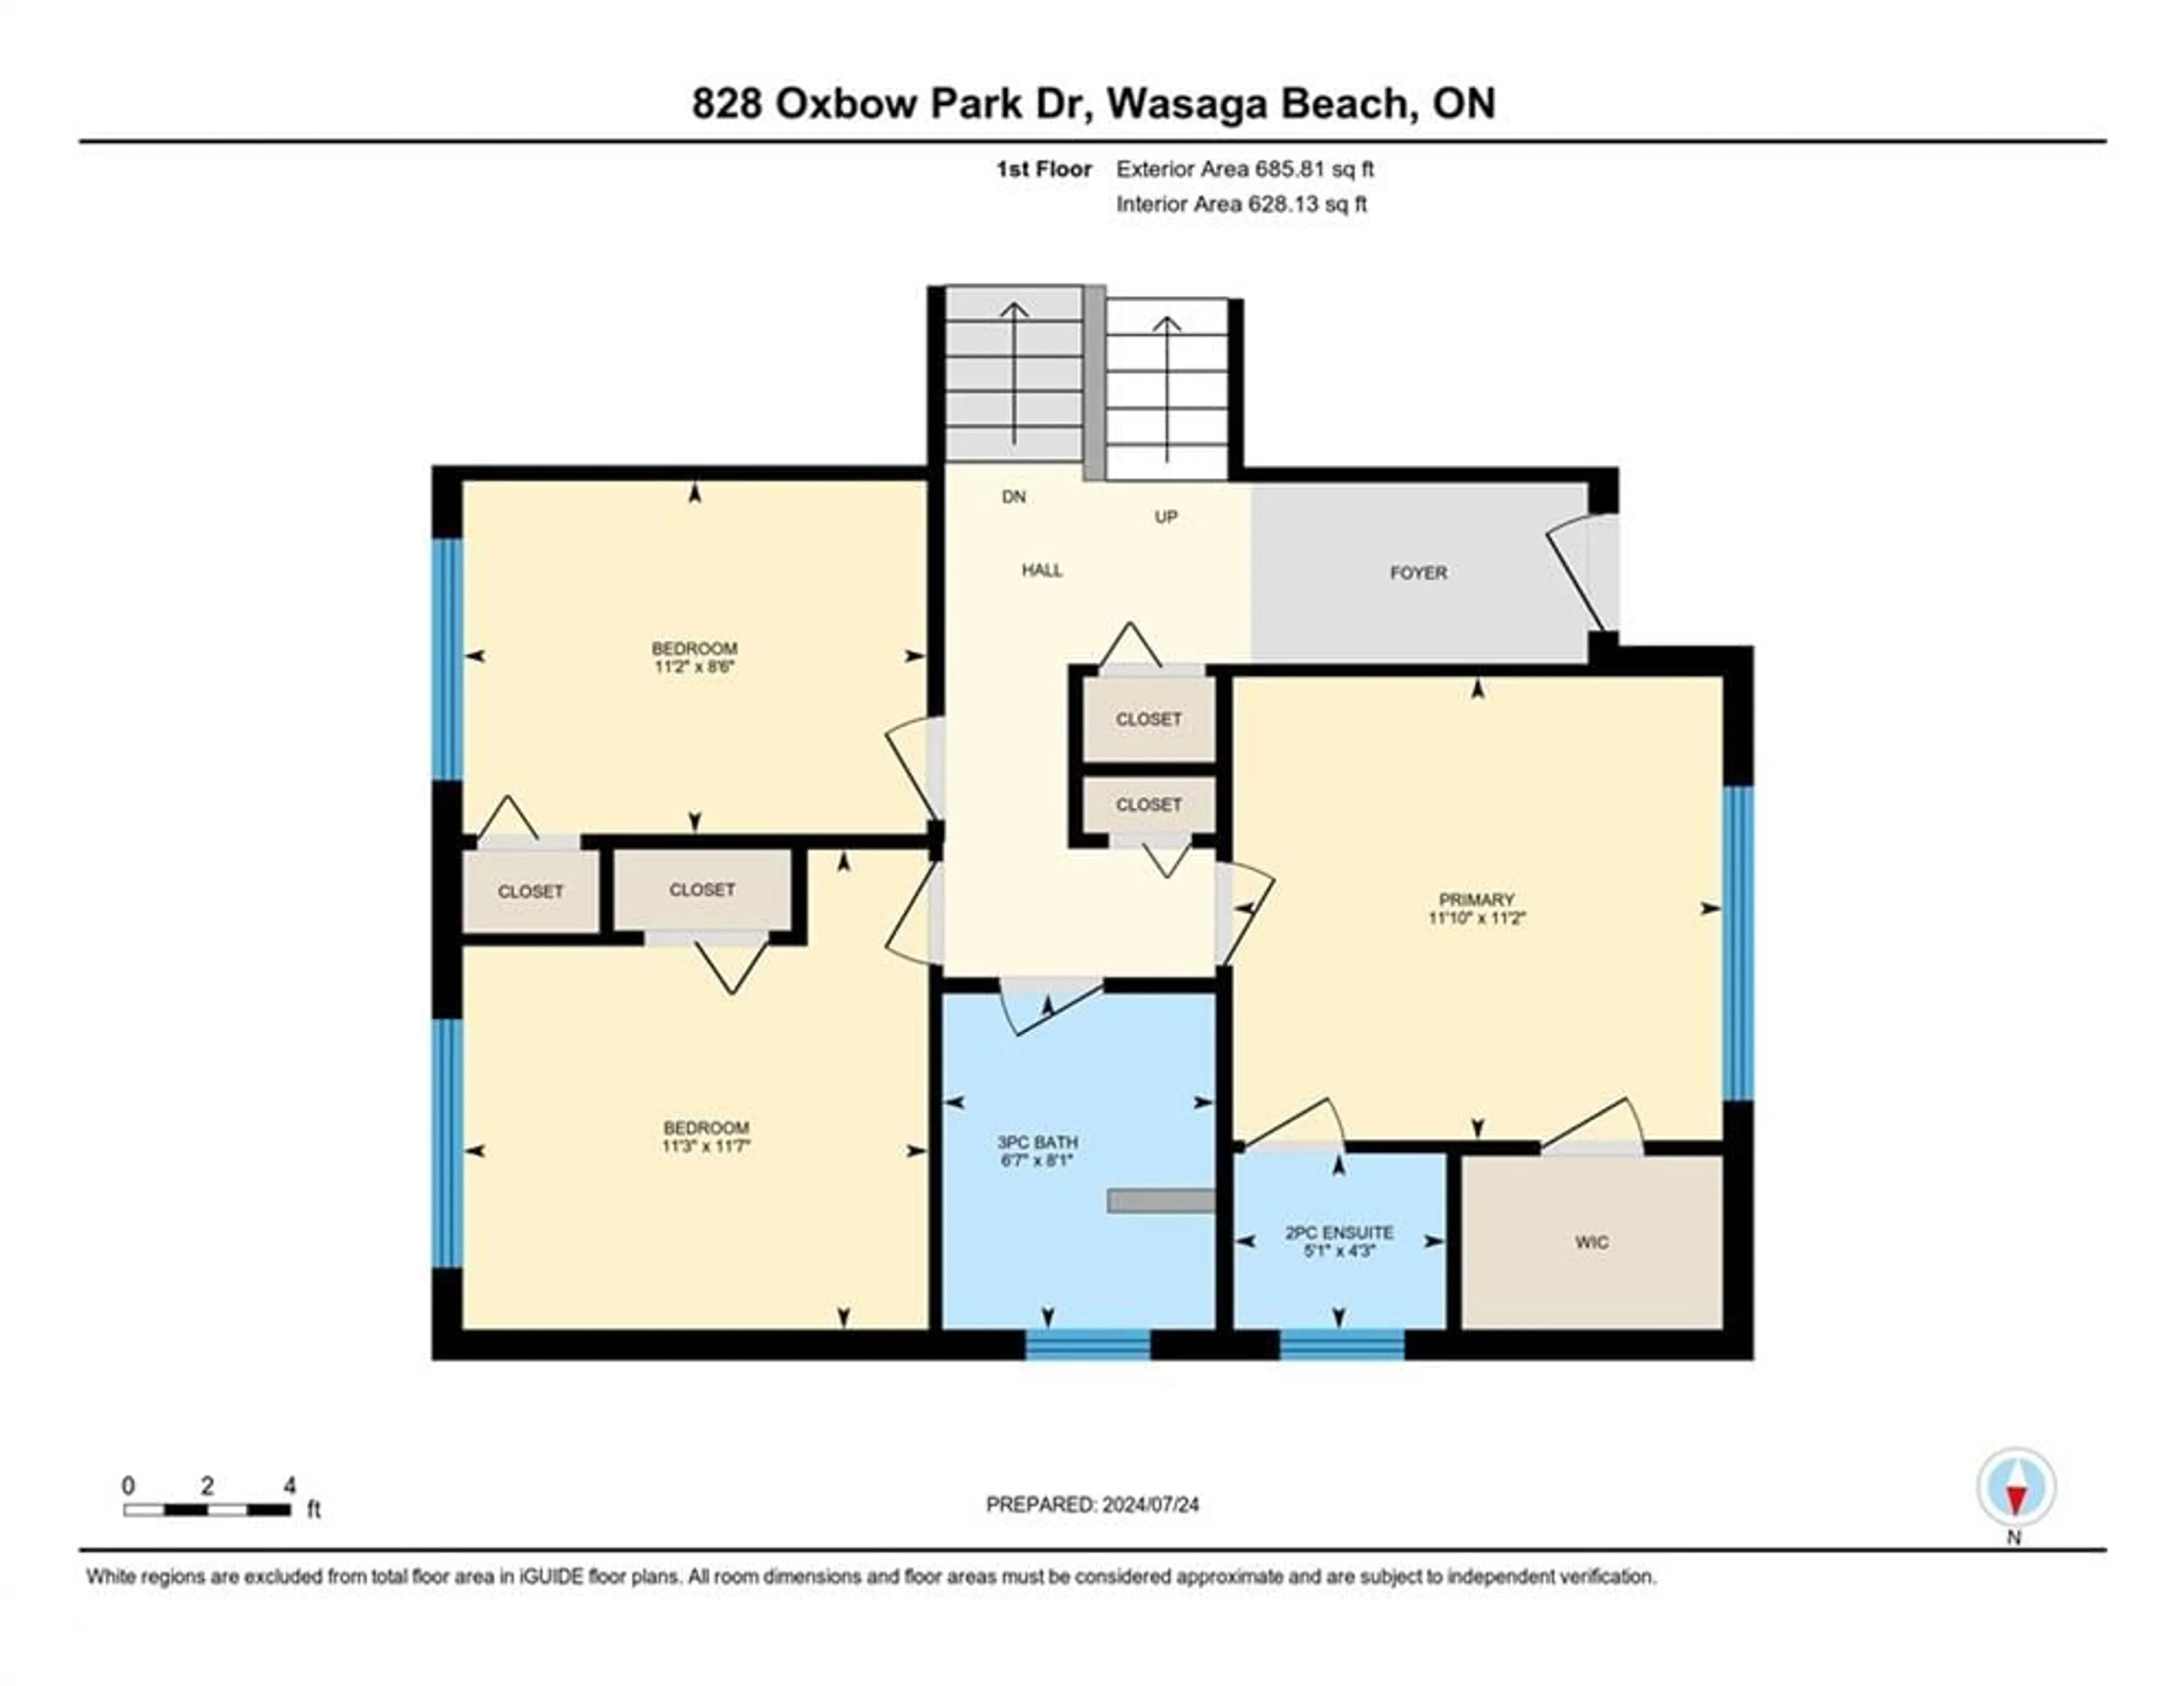 Floor plan for 828 Oxbow Park Dr, Wasaga Beach Ontario L9Z 2V1